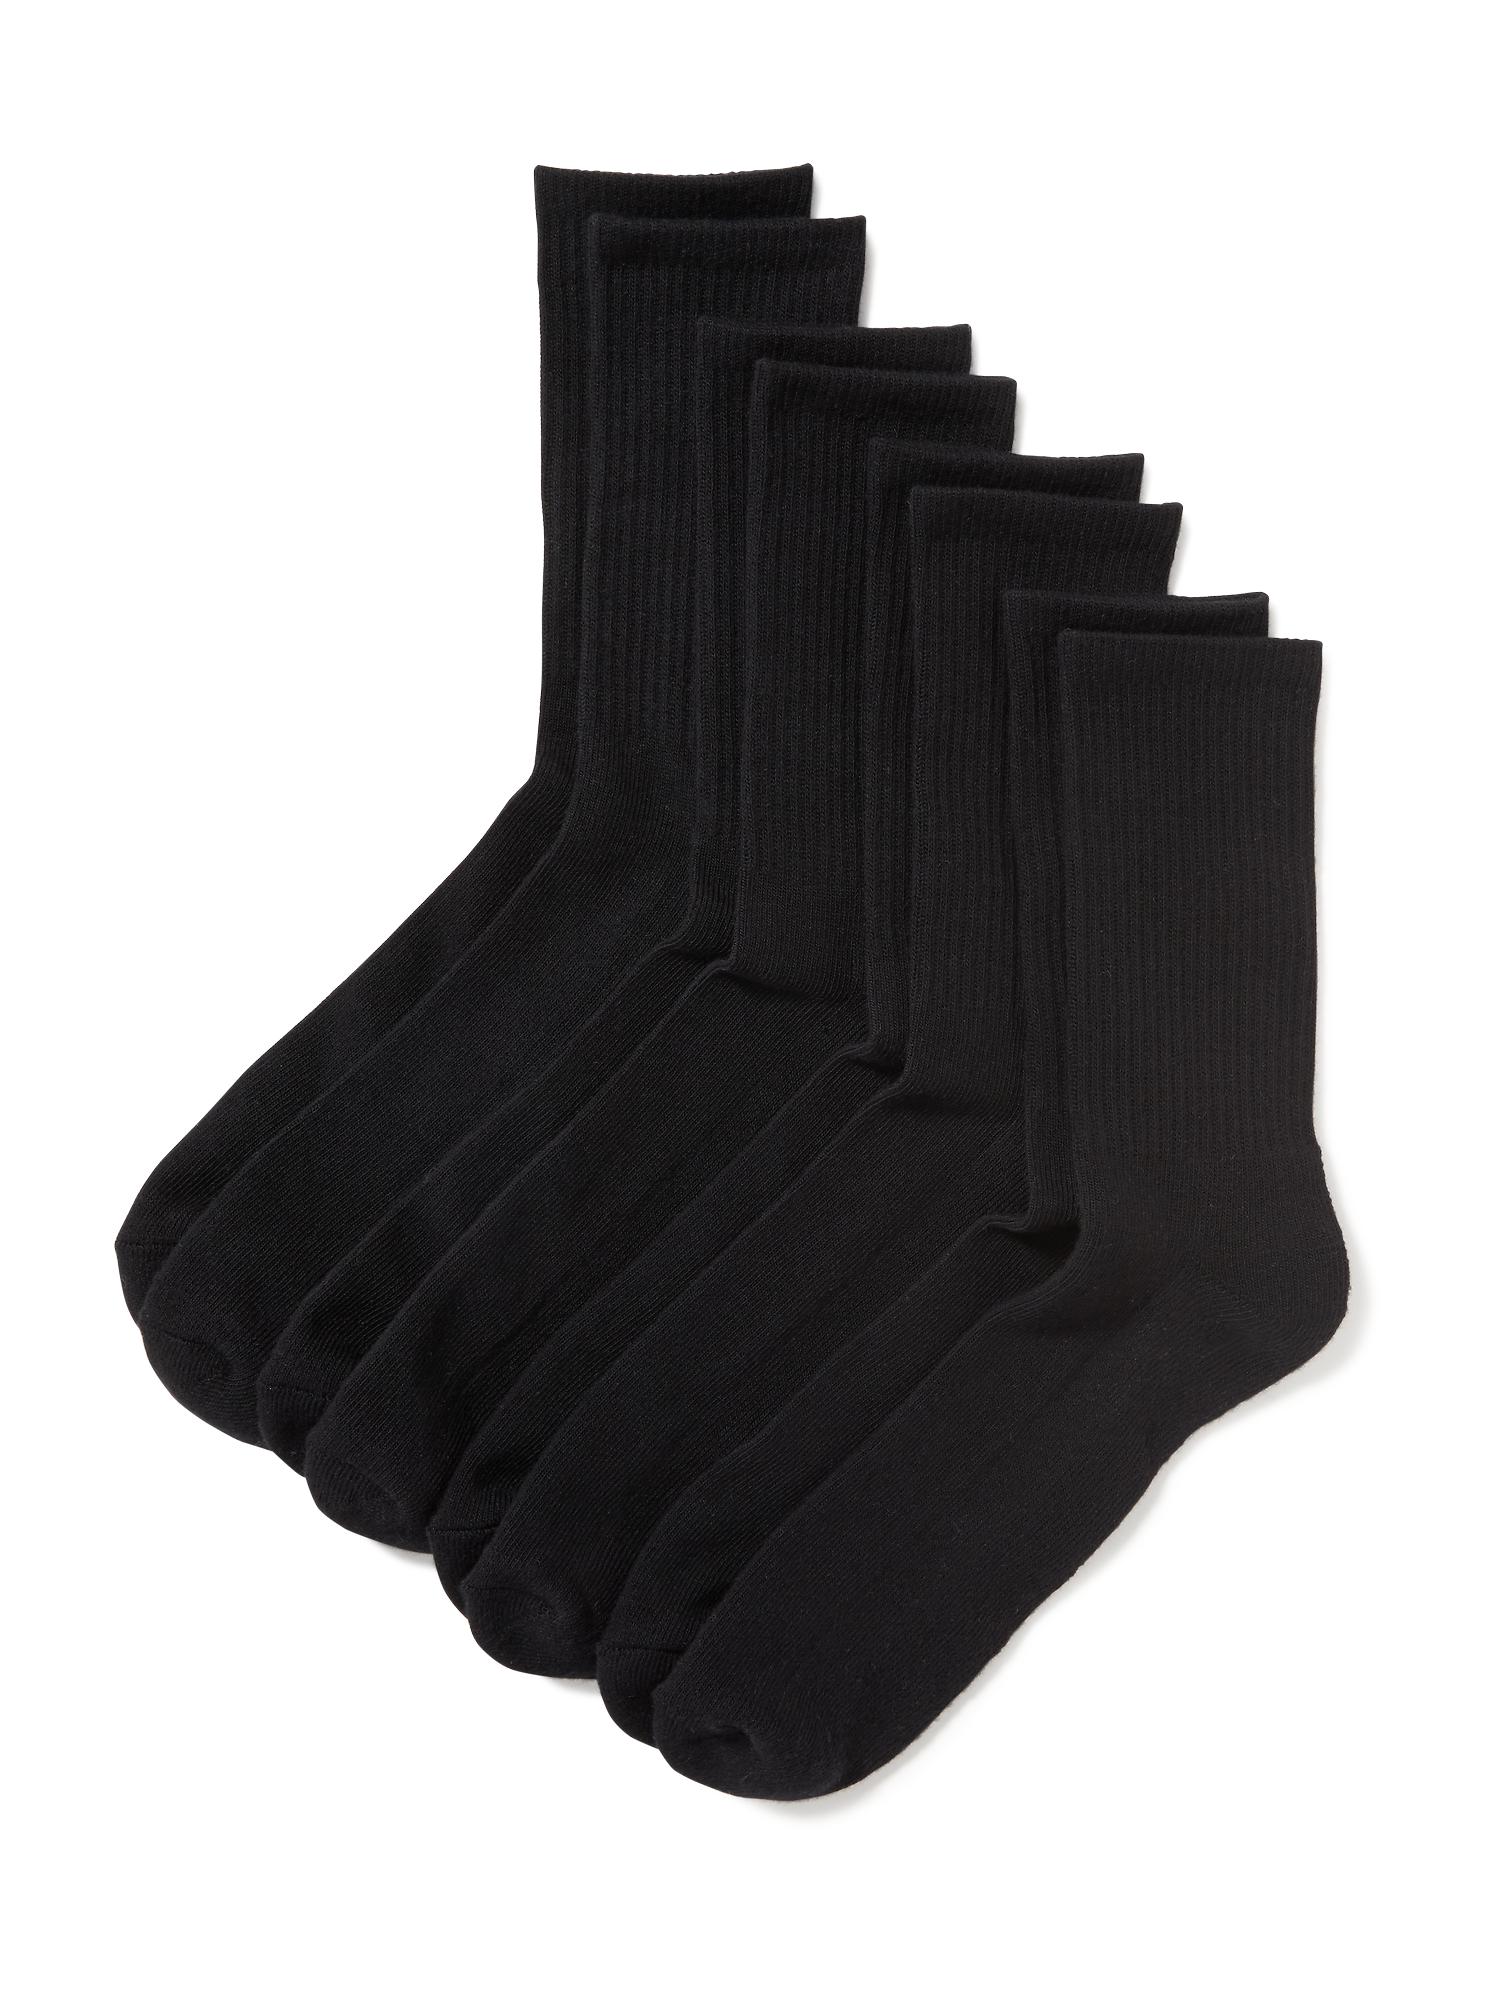 Old Navy Crew Socks 4-Pack black. 1